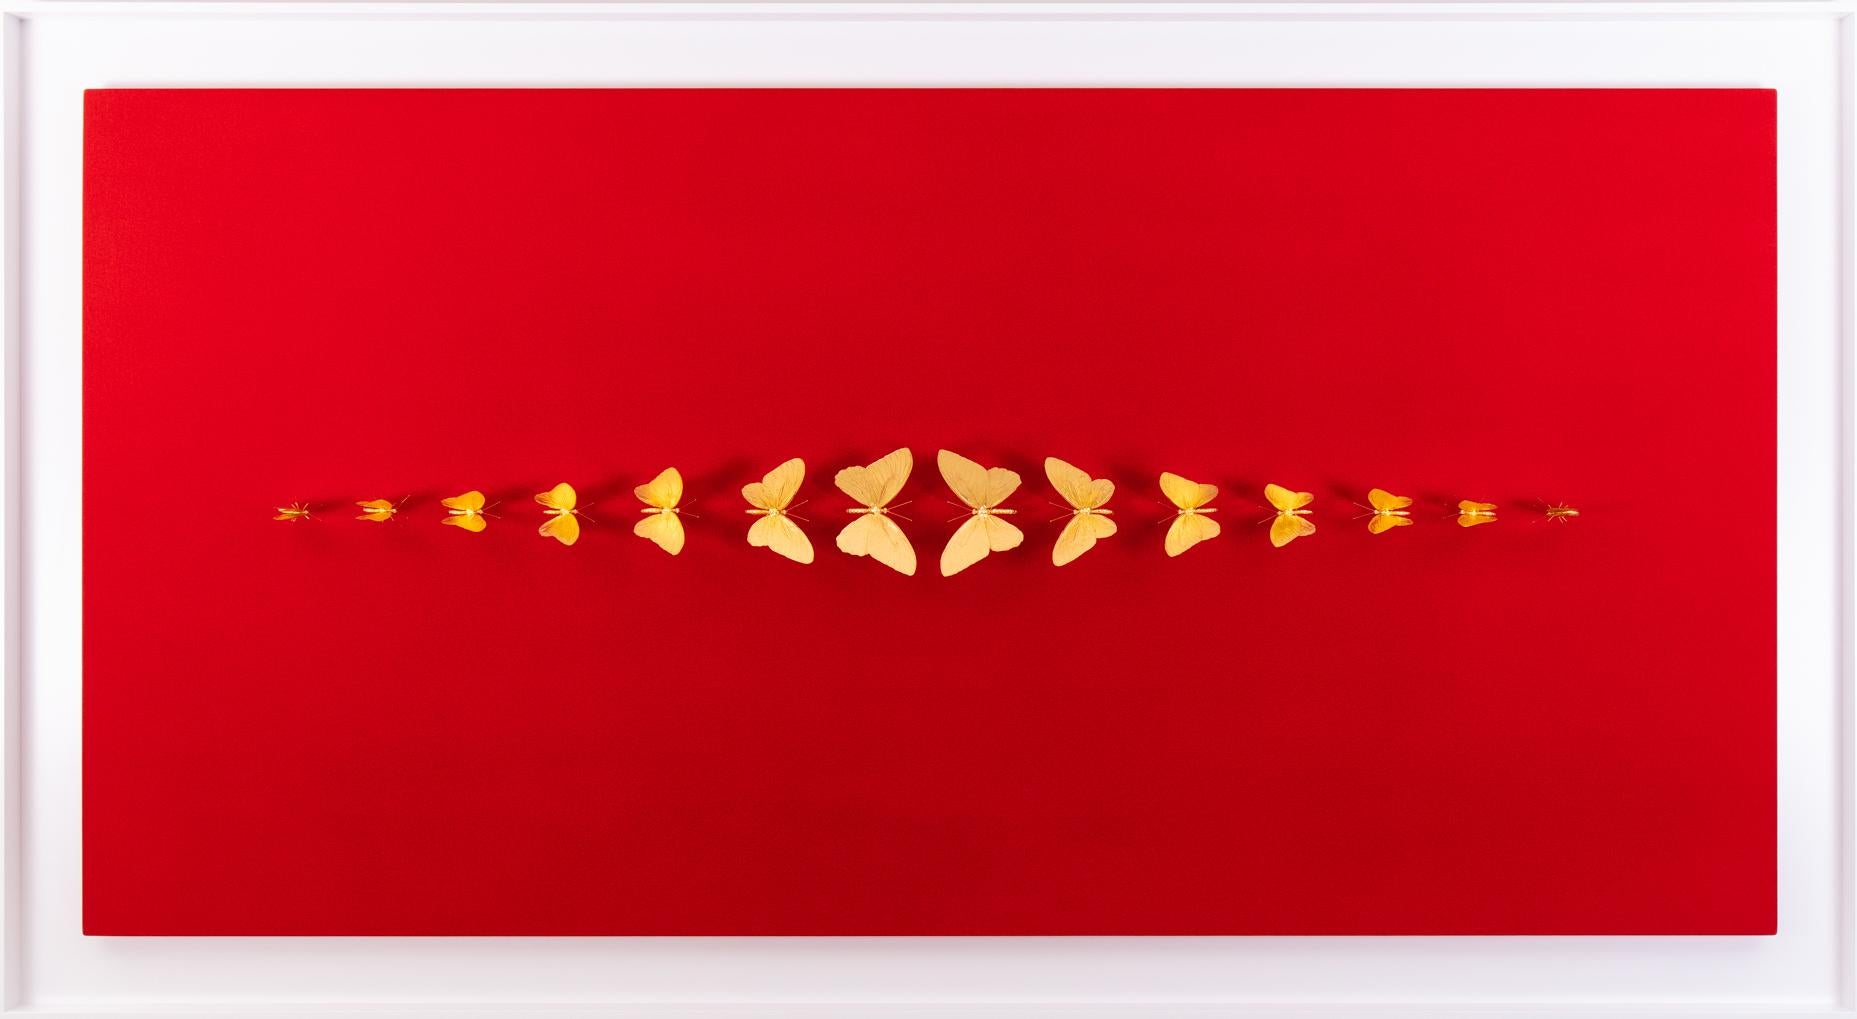 Metamorphosis Red II - 21st Century, Contemporary Figurative, Golden Butterflies - Mixed Media Art by Samuel Dejong